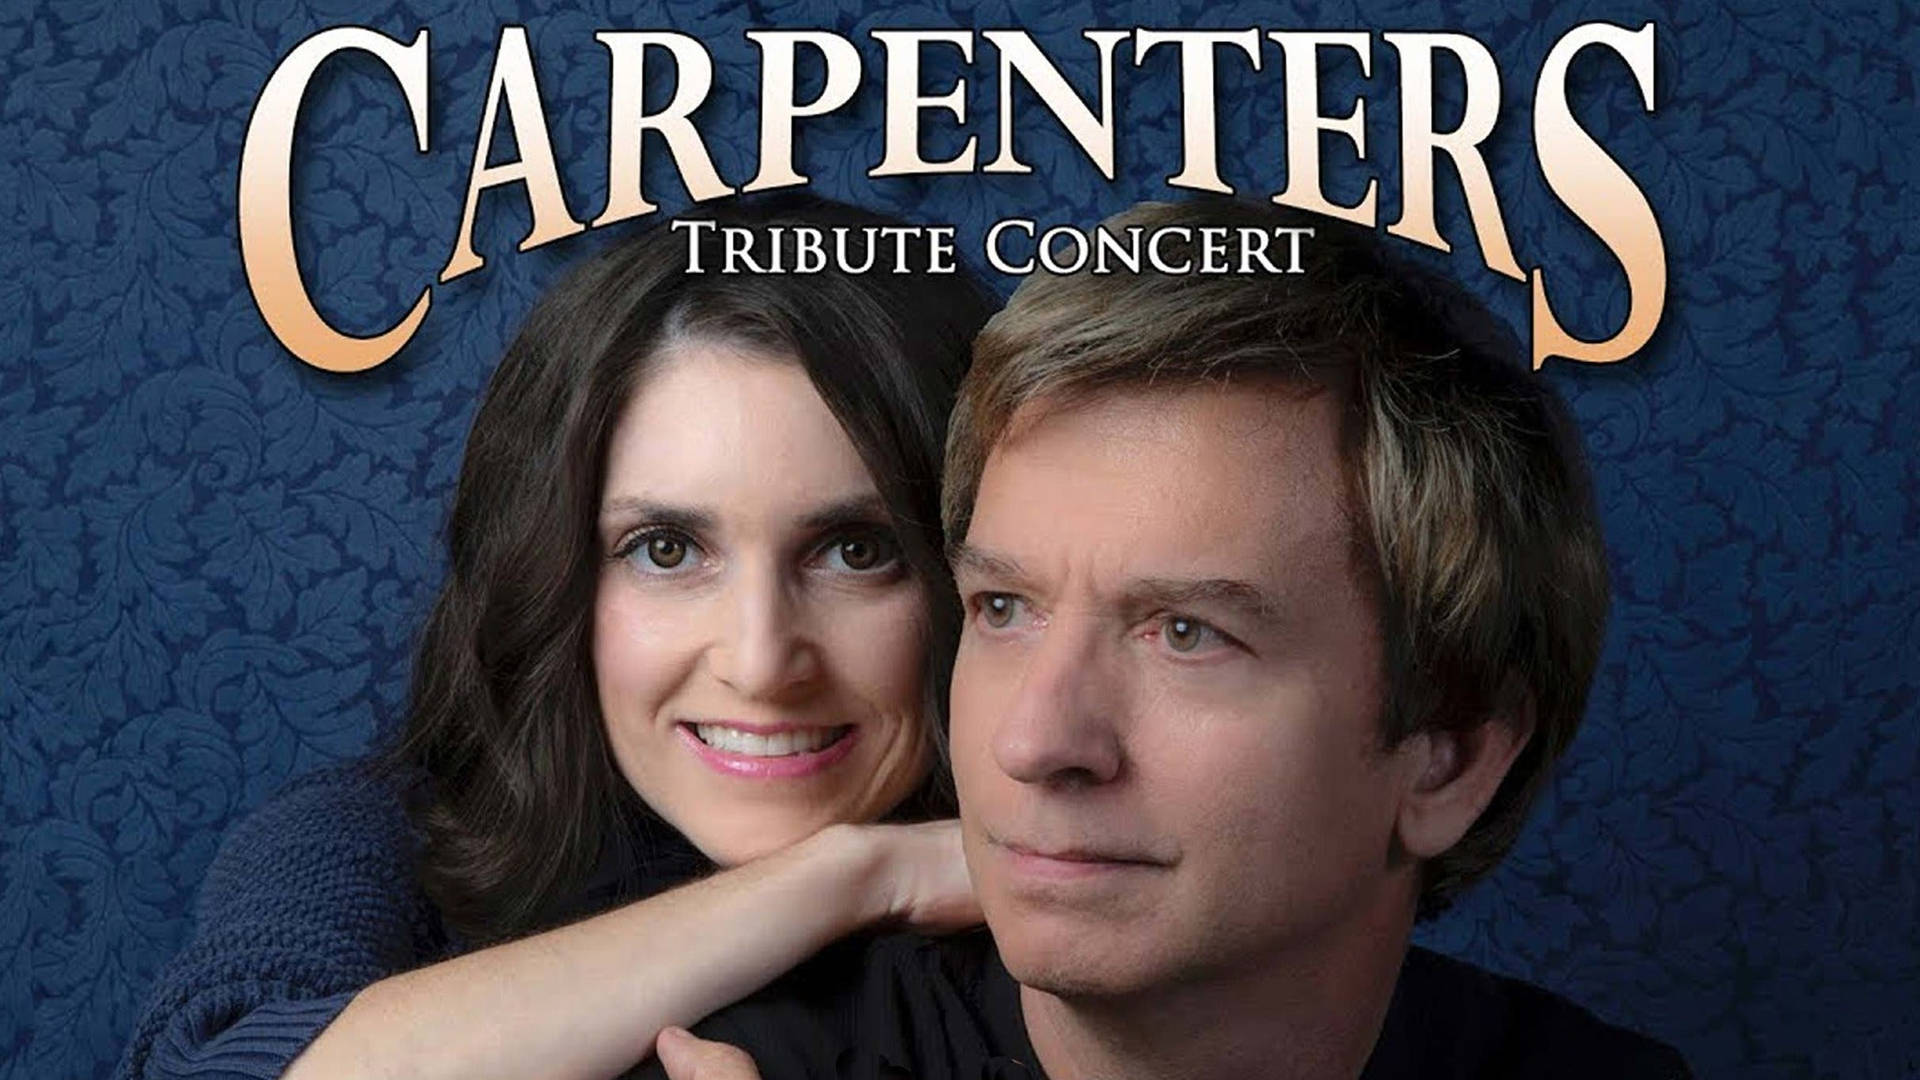 Carpenters Tribute Concert Wallpaper